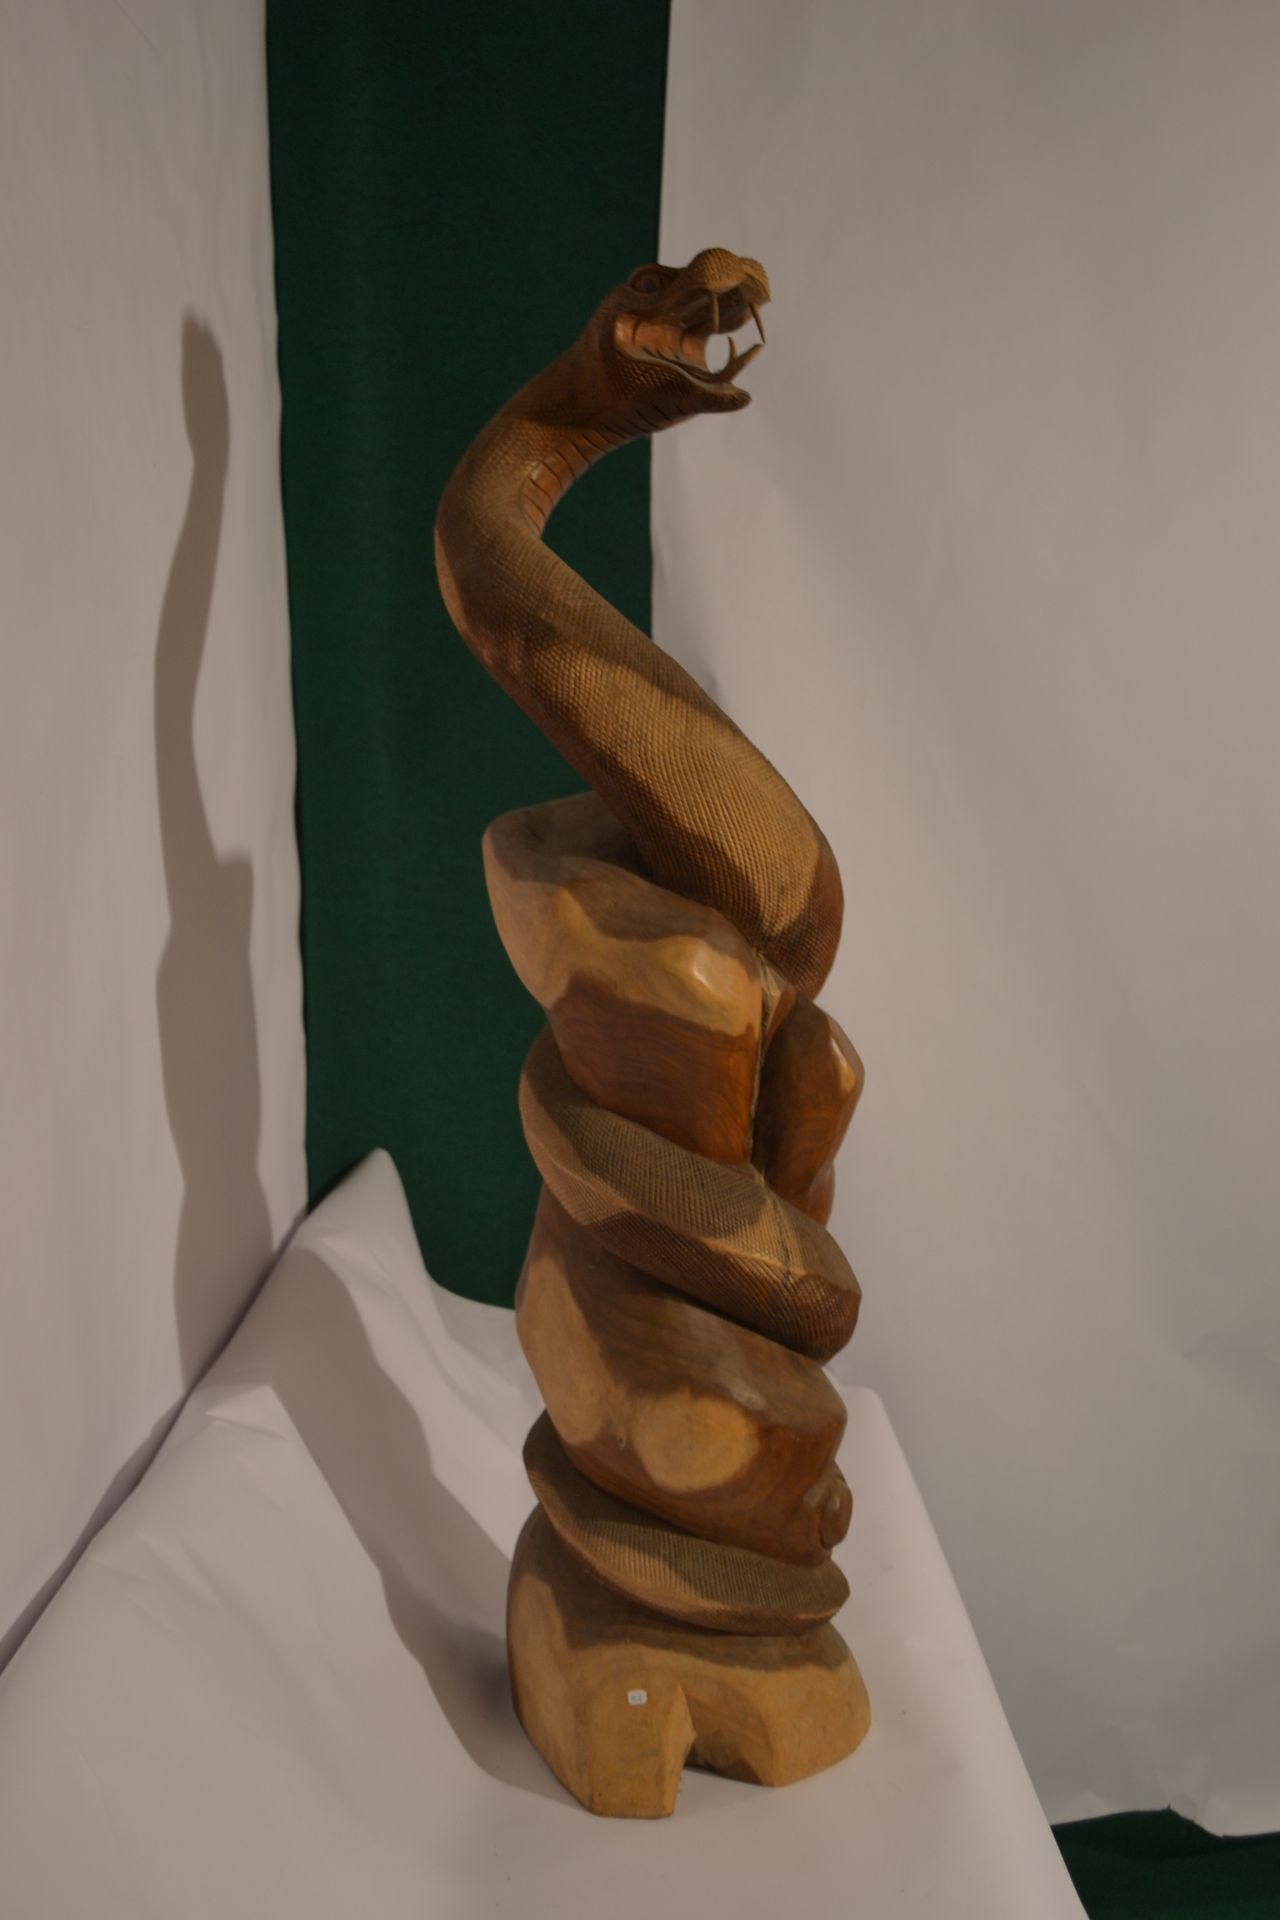 Null 雕刻的盘蛇

苏木

高度104 - 直径27

重量：25公斤。